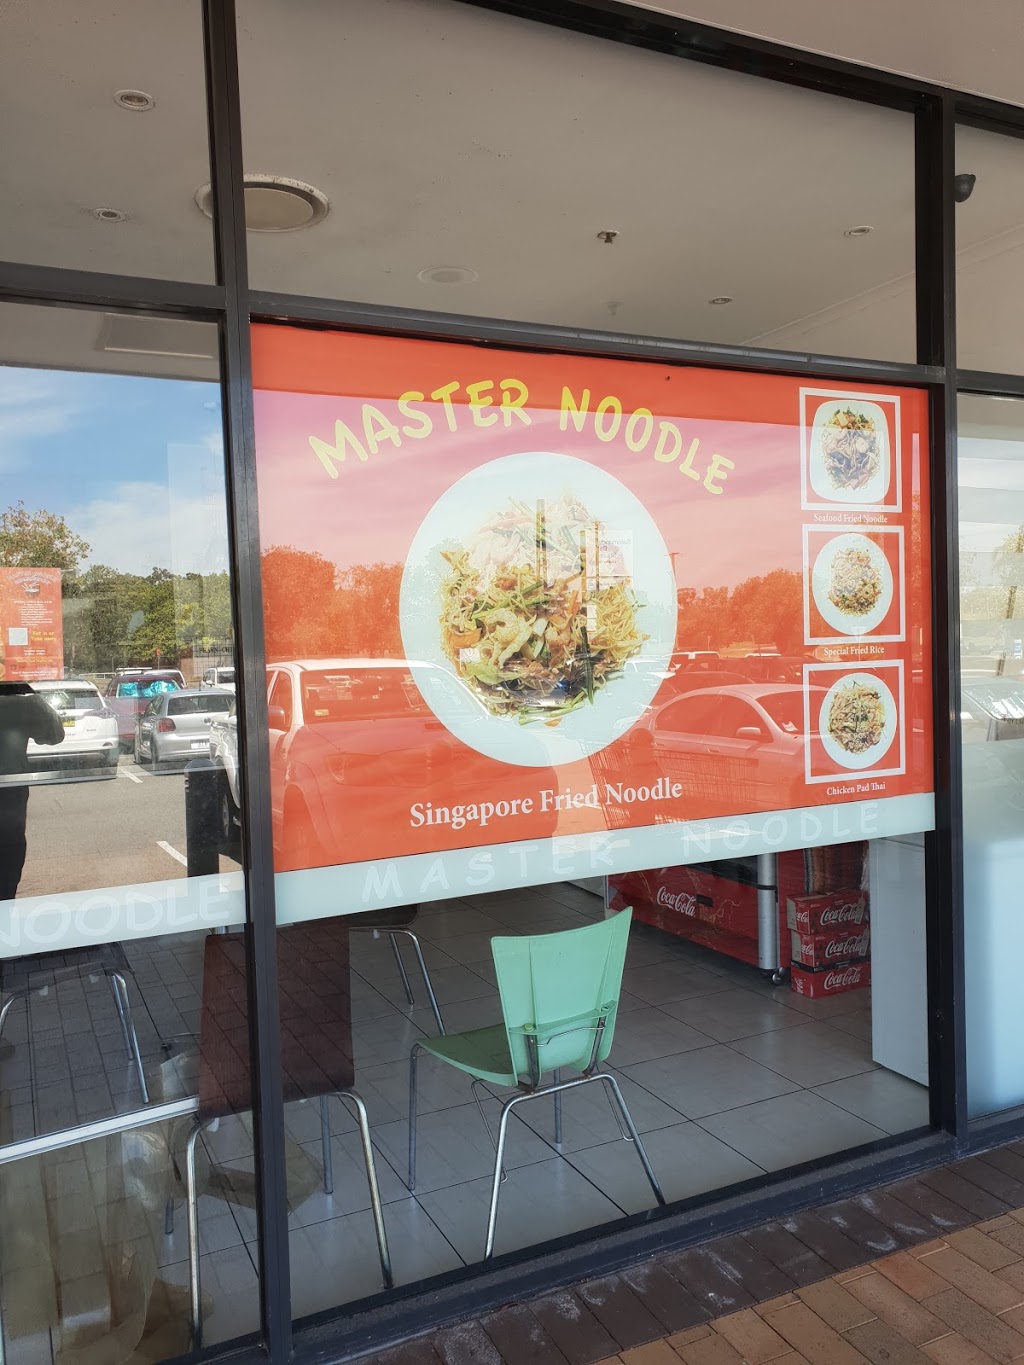 Master Noodle | restaurant | 3c/2 Town Centre Cct, Salamander Bay NSW 2317, Australia | 0249191608 OR +61 2 4919 1608